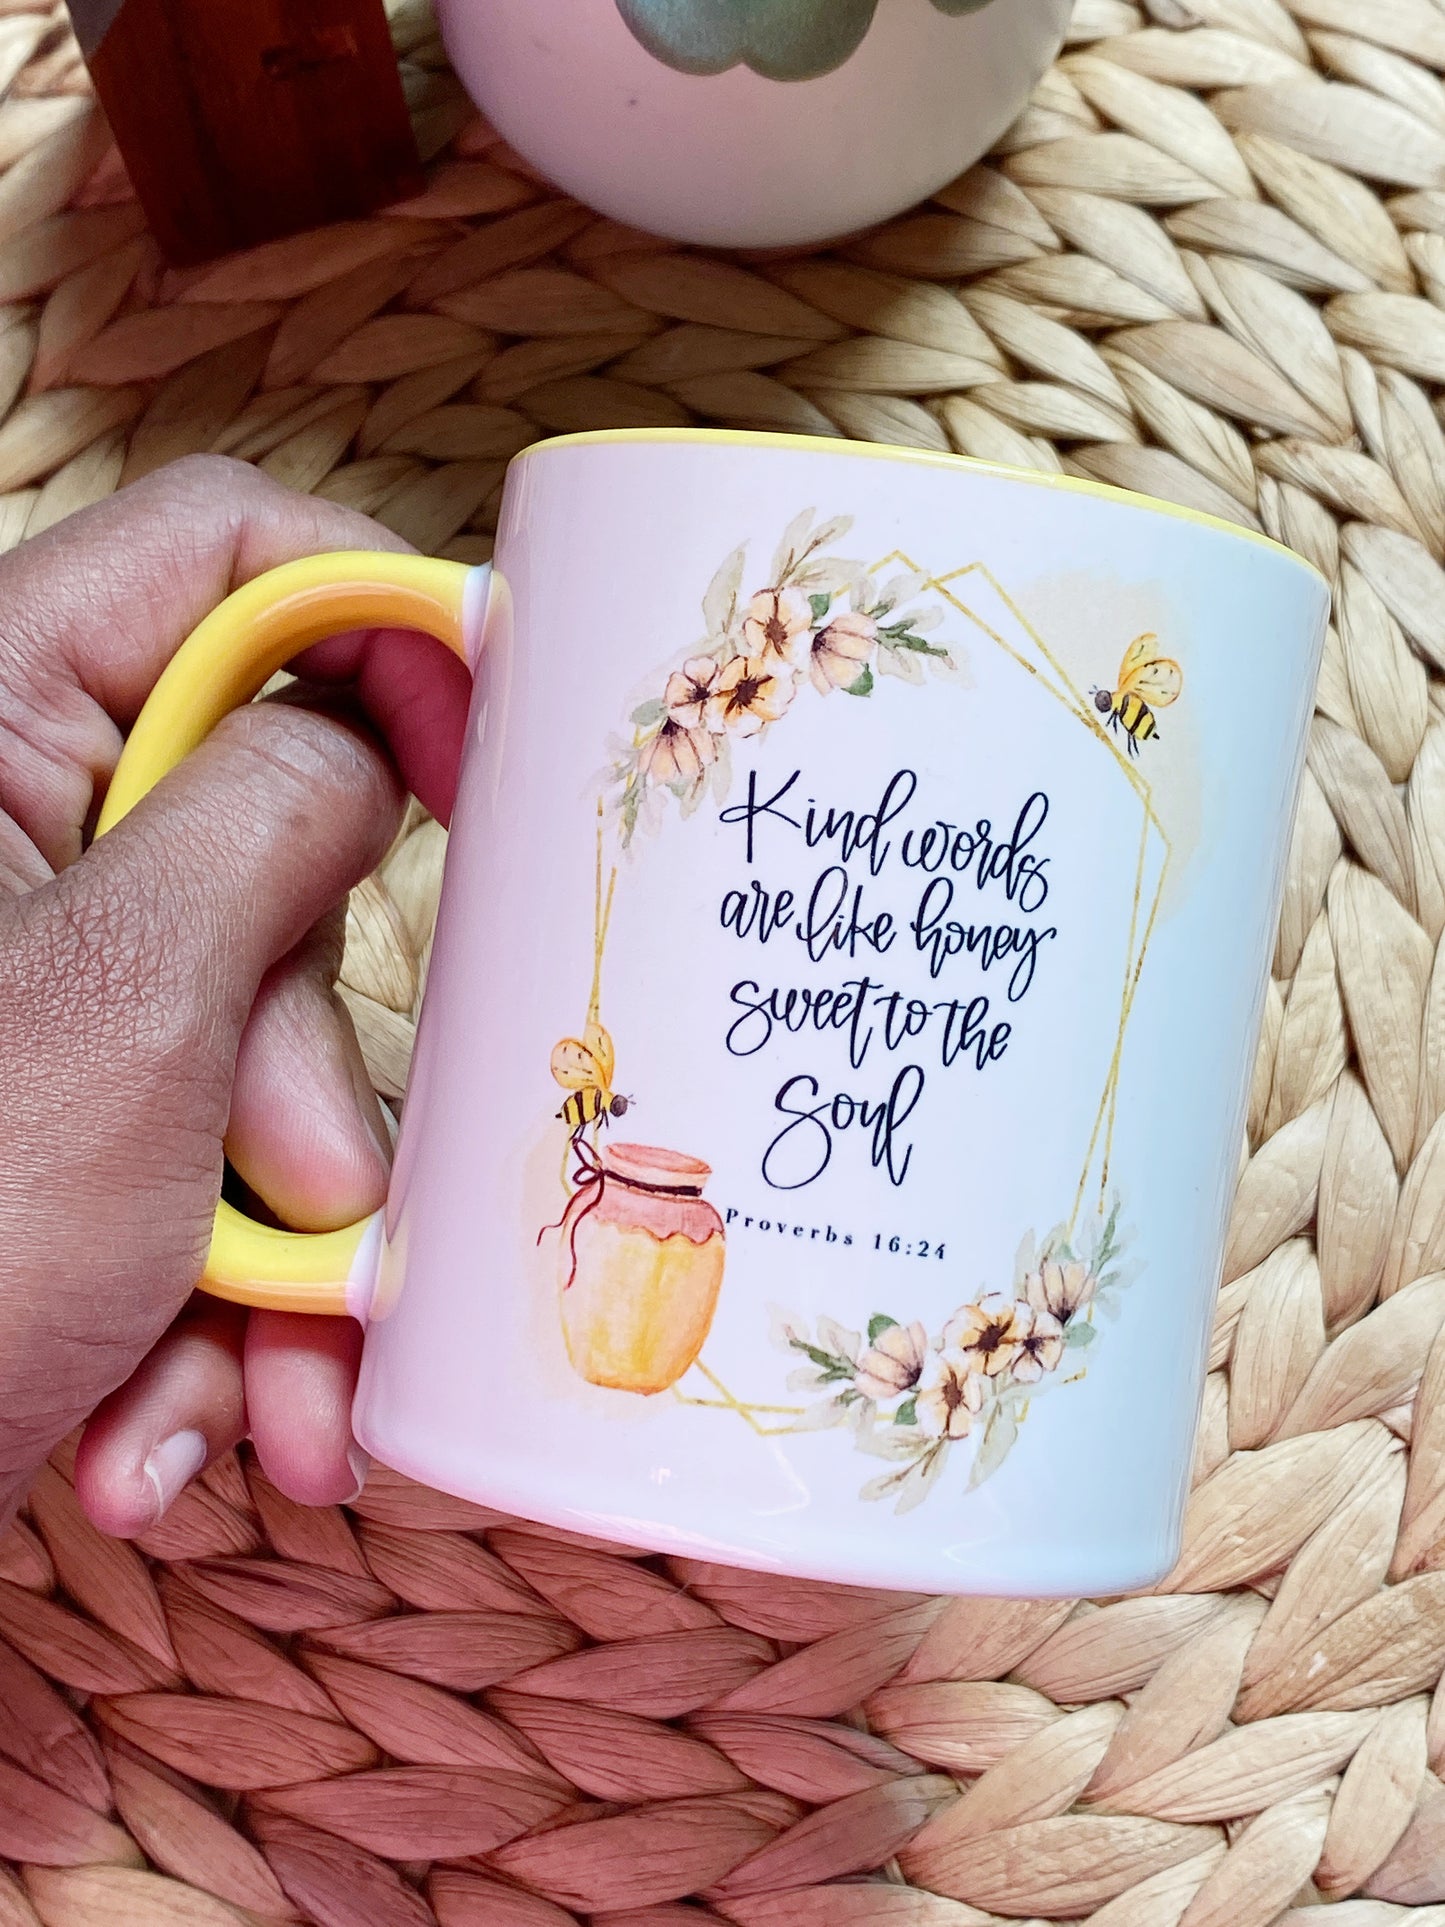 Kind Words are like honey - Proverbs 16:24 Christian Mug